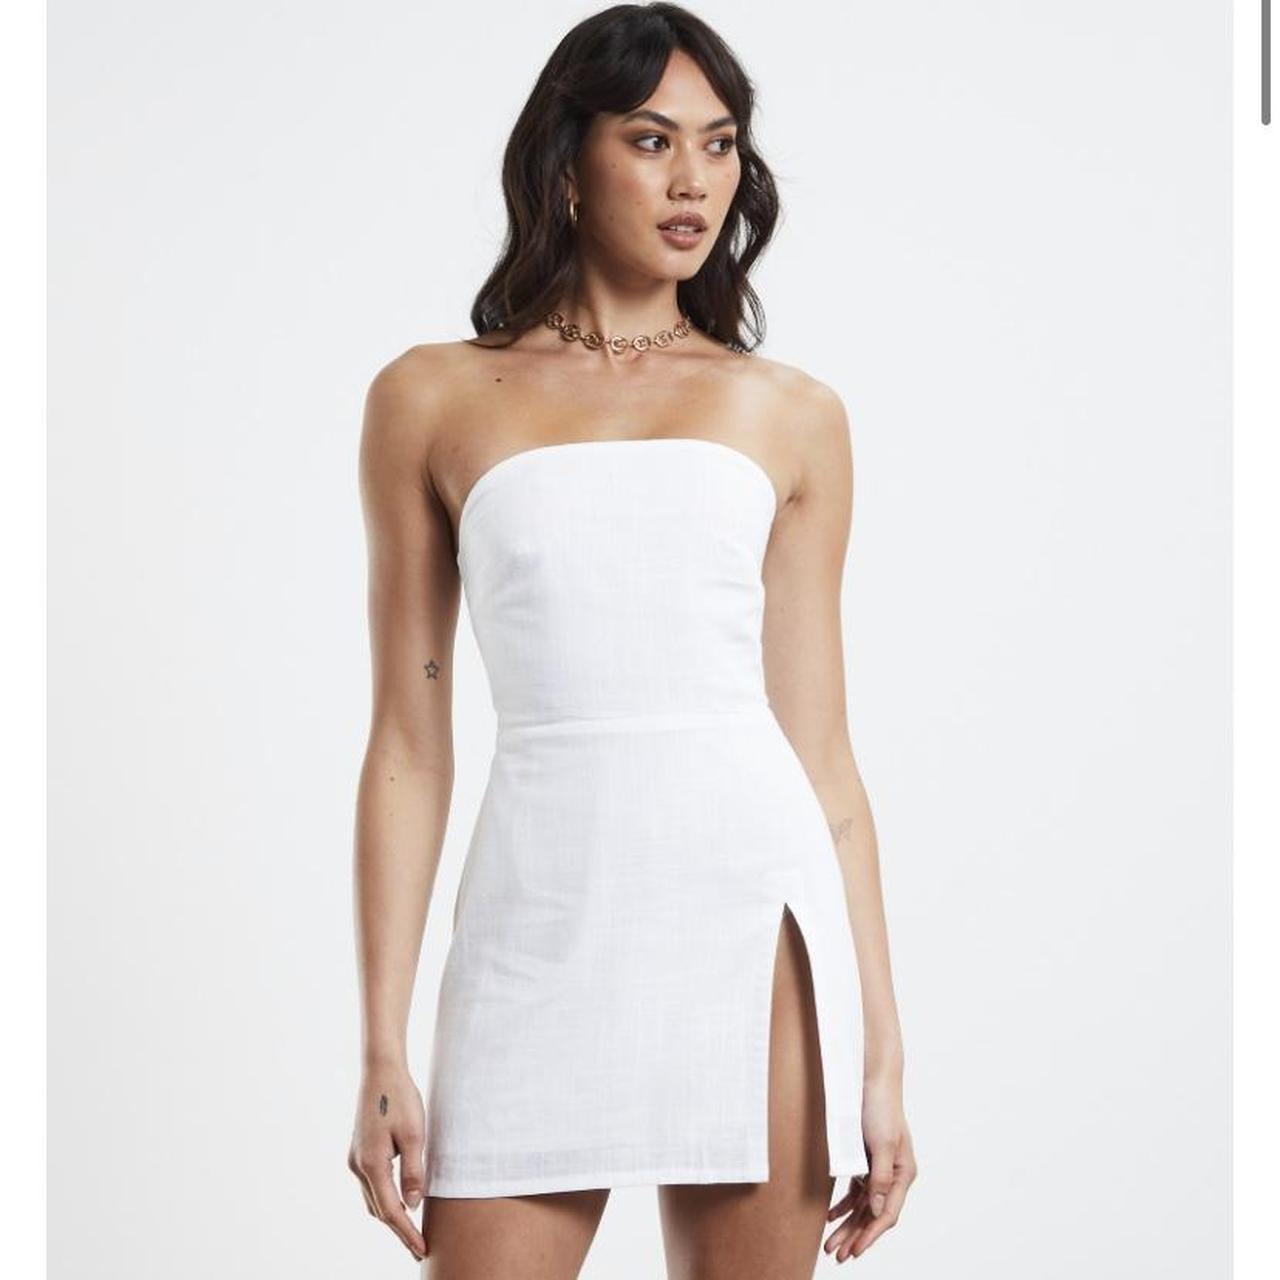 SNDYS Serena Mini Dress White linen strapless dress... - Depop